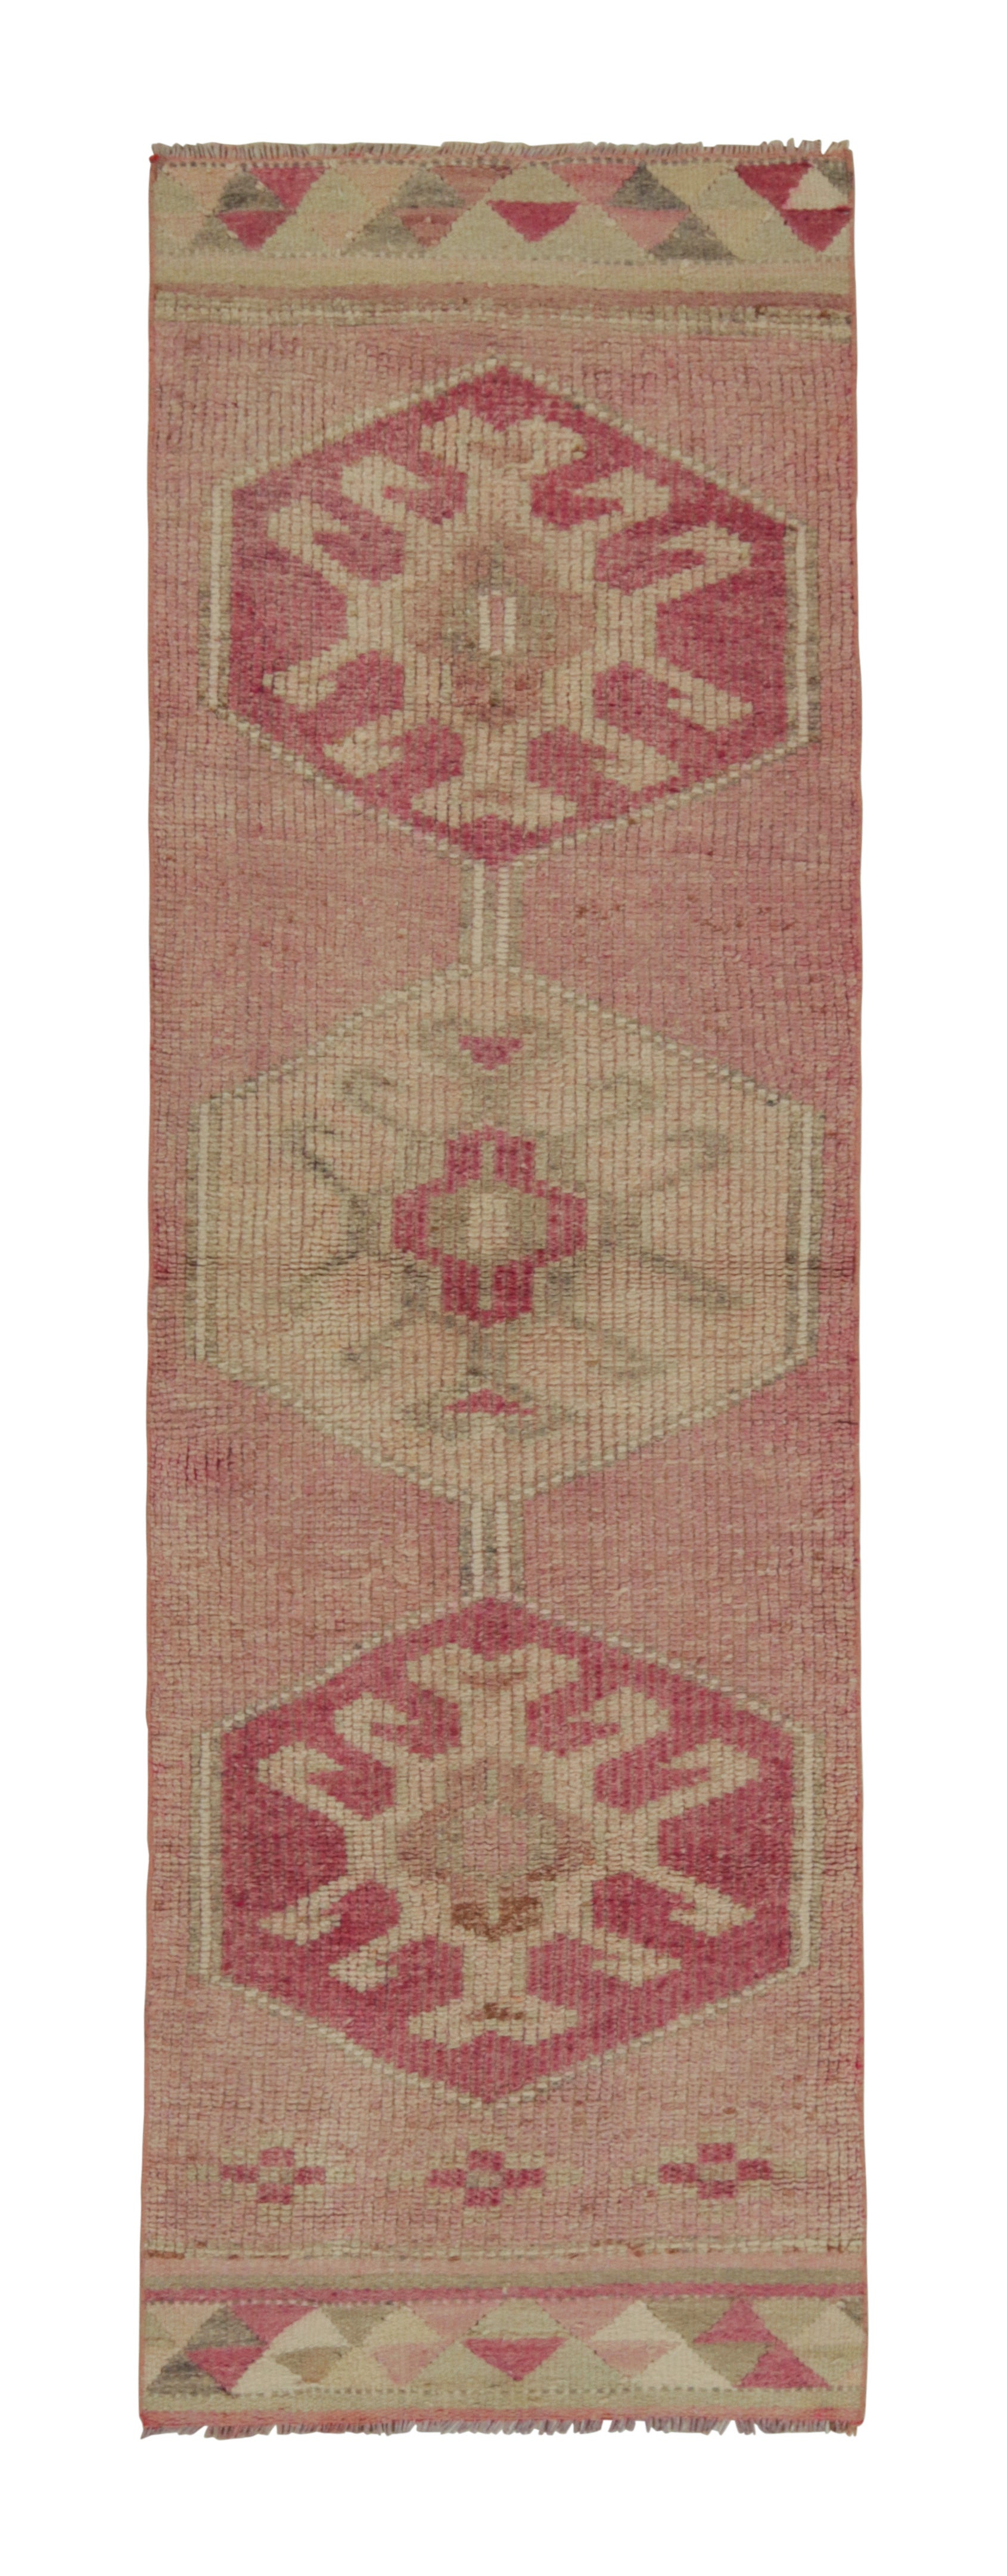 Vintage Tribal Runner in Pink with Medallion Patterns by Rug & Kilim